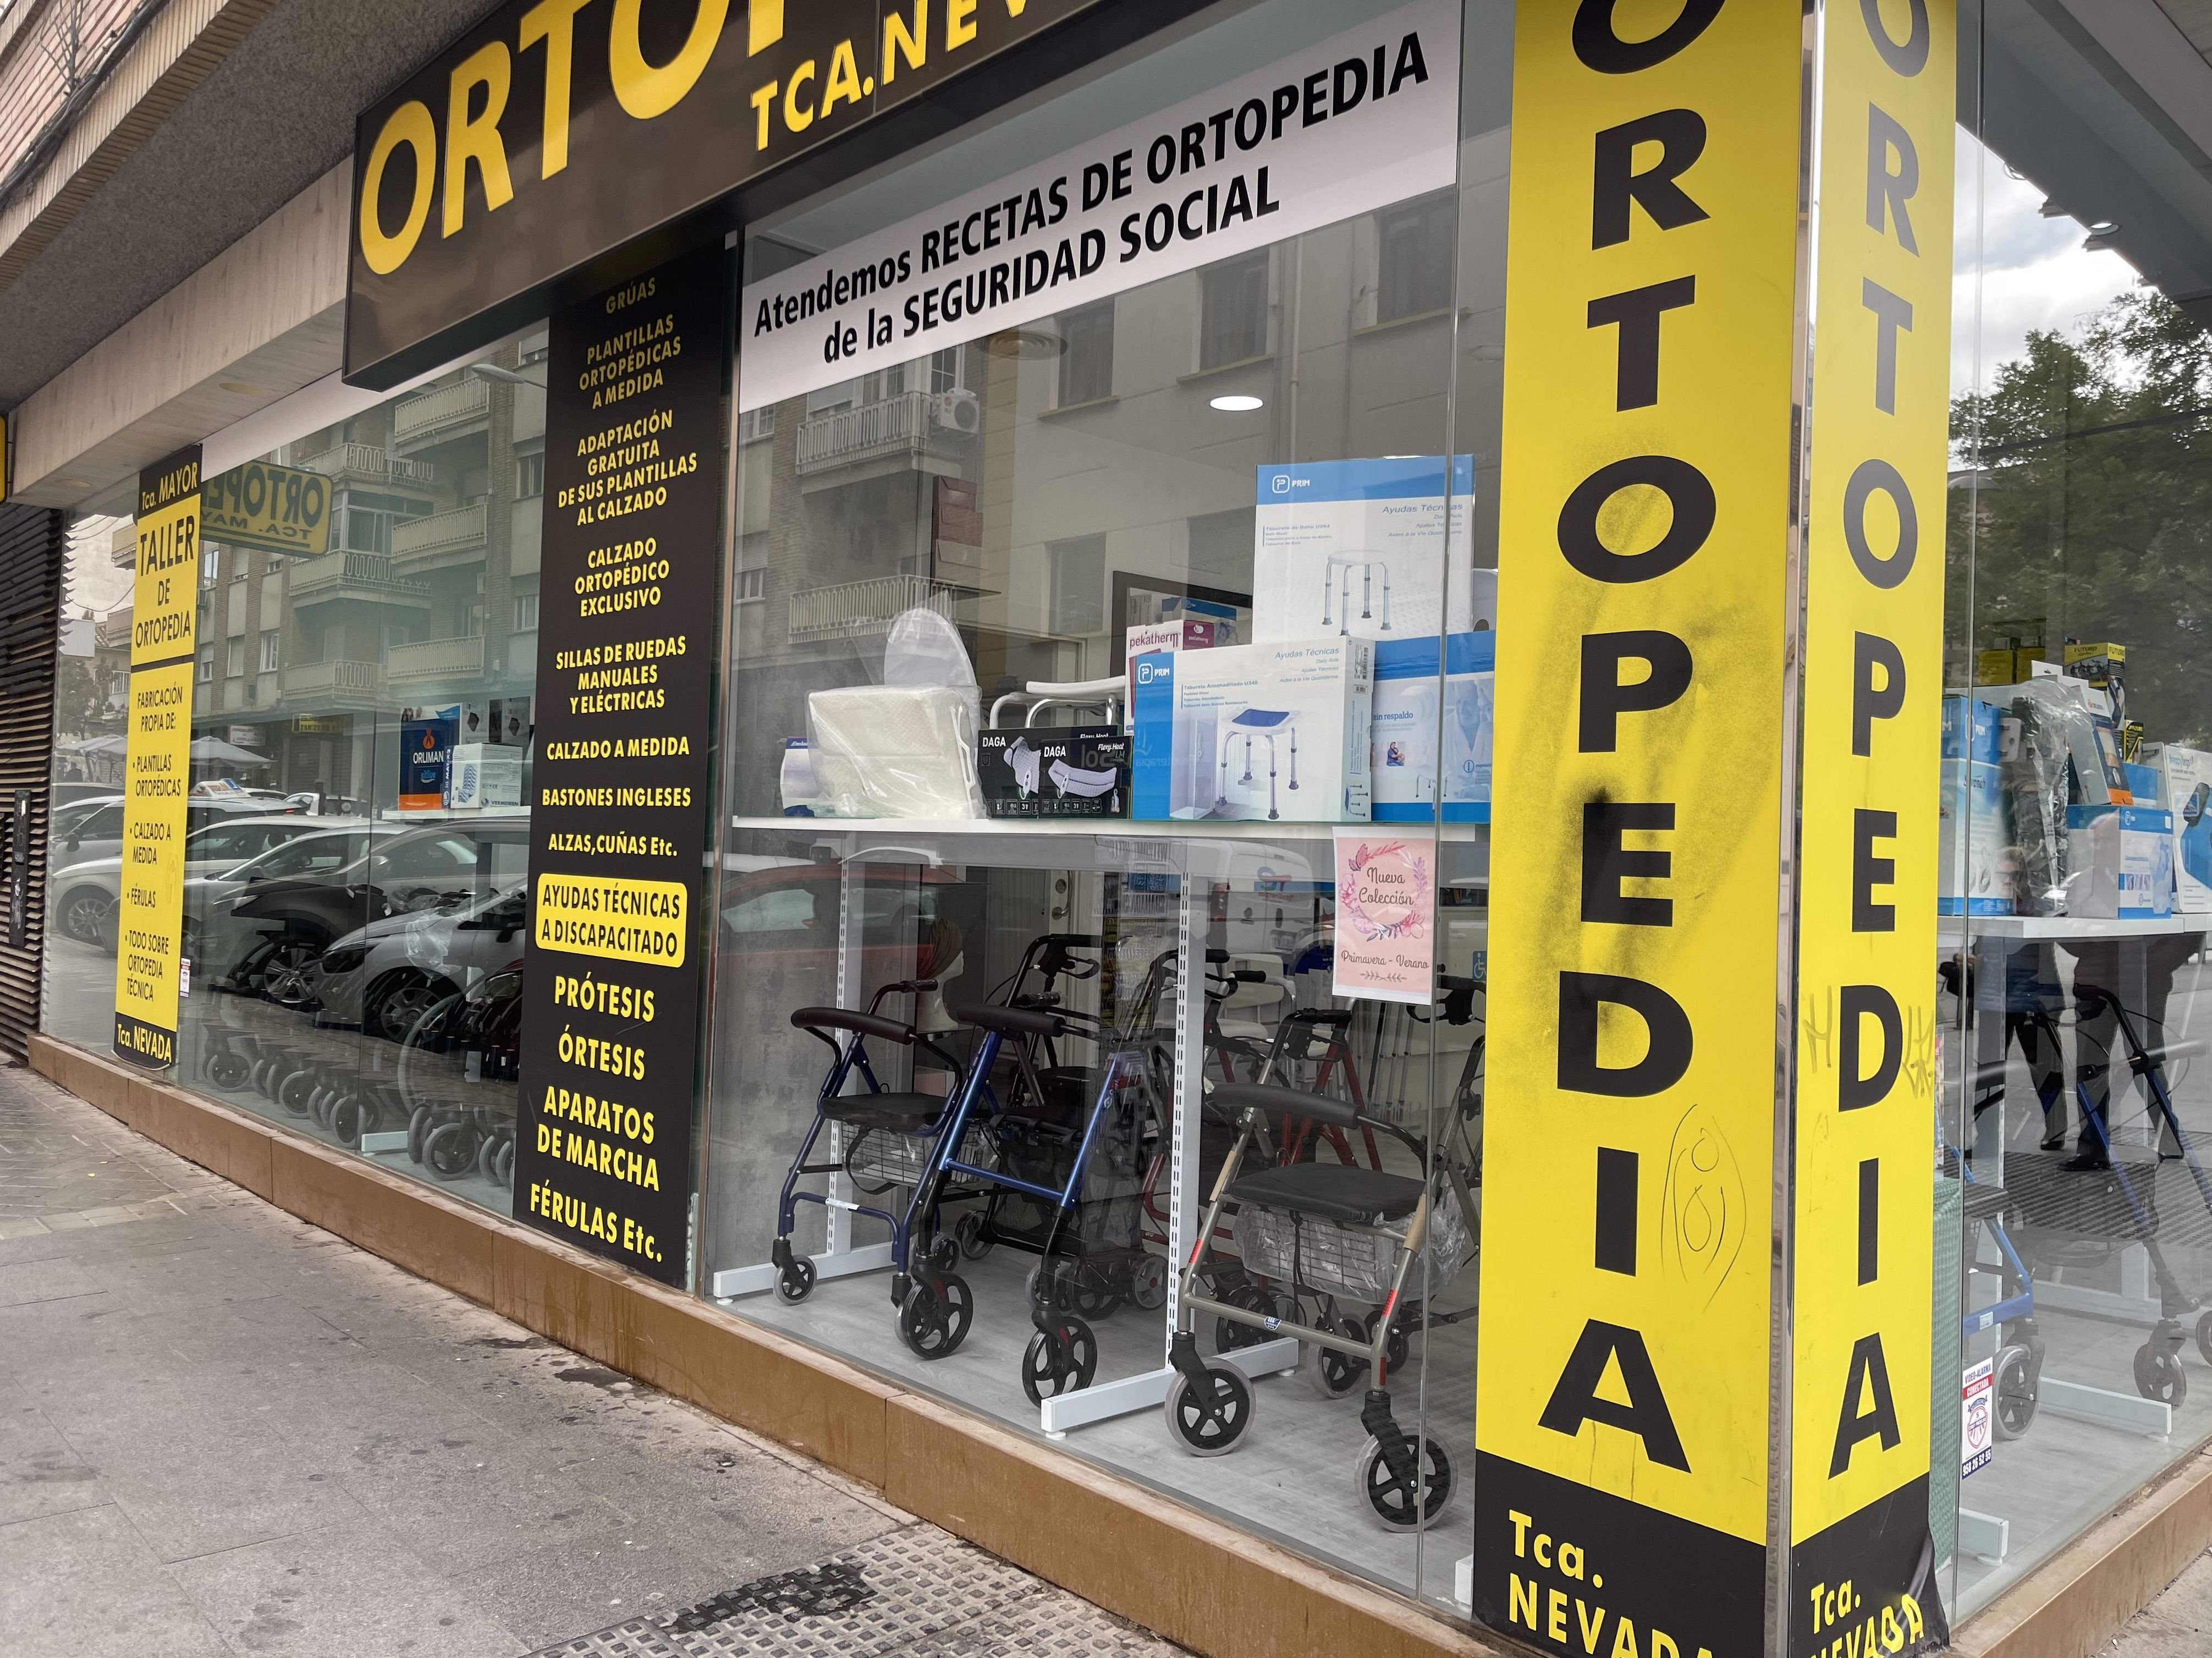 Foto 16 de Ortopedia en GRANADA | ORTOPEDIA TECNICA NEVADA